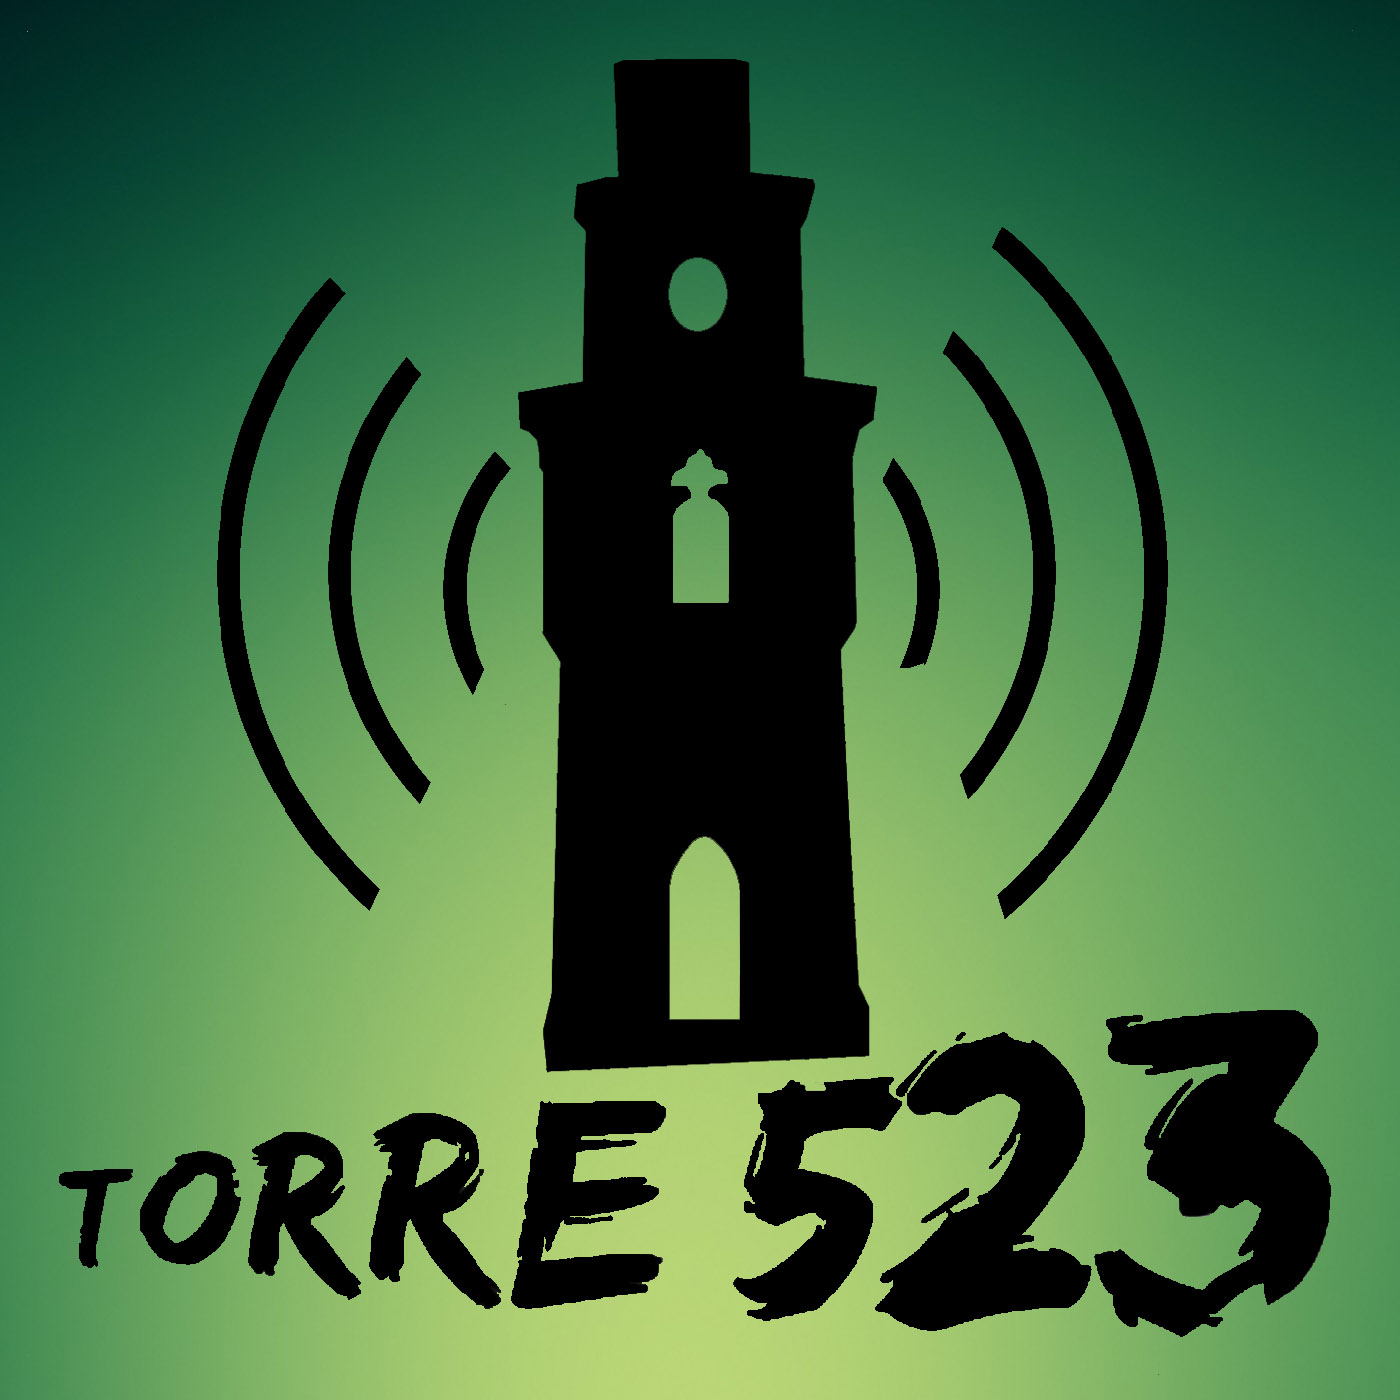 Torre 523